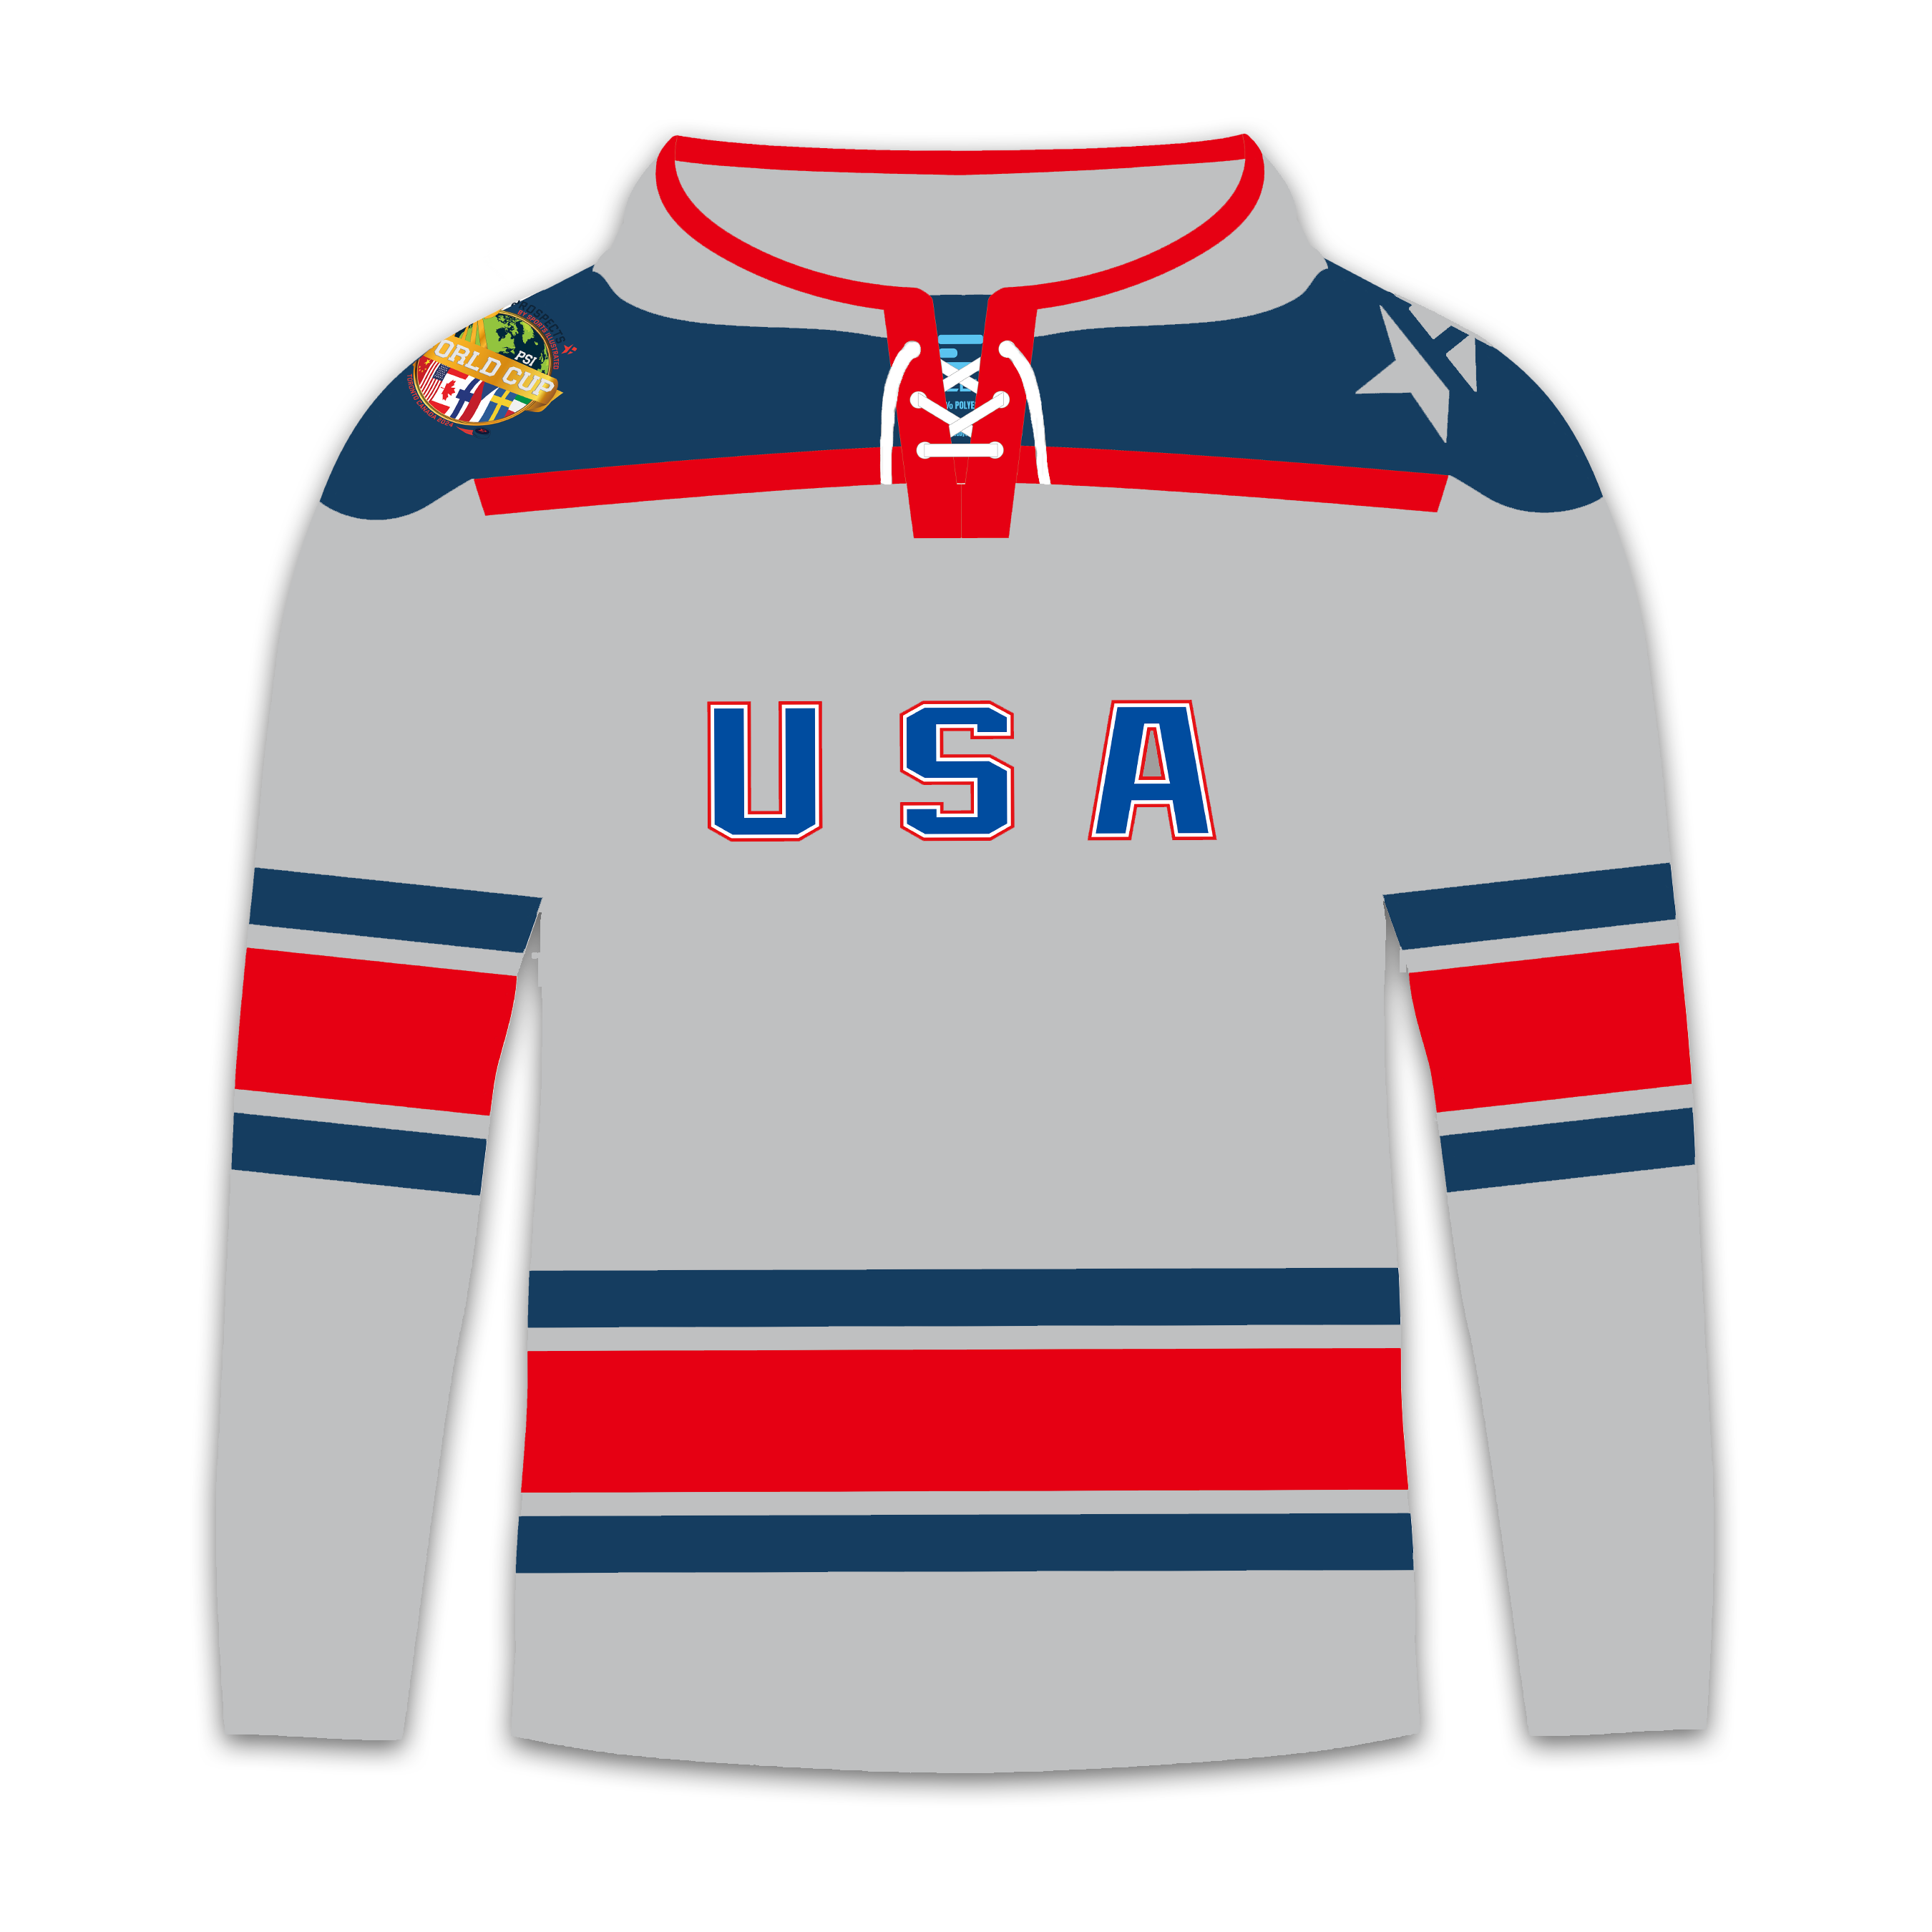 USA:n hopeinen MM-hockey-huppari